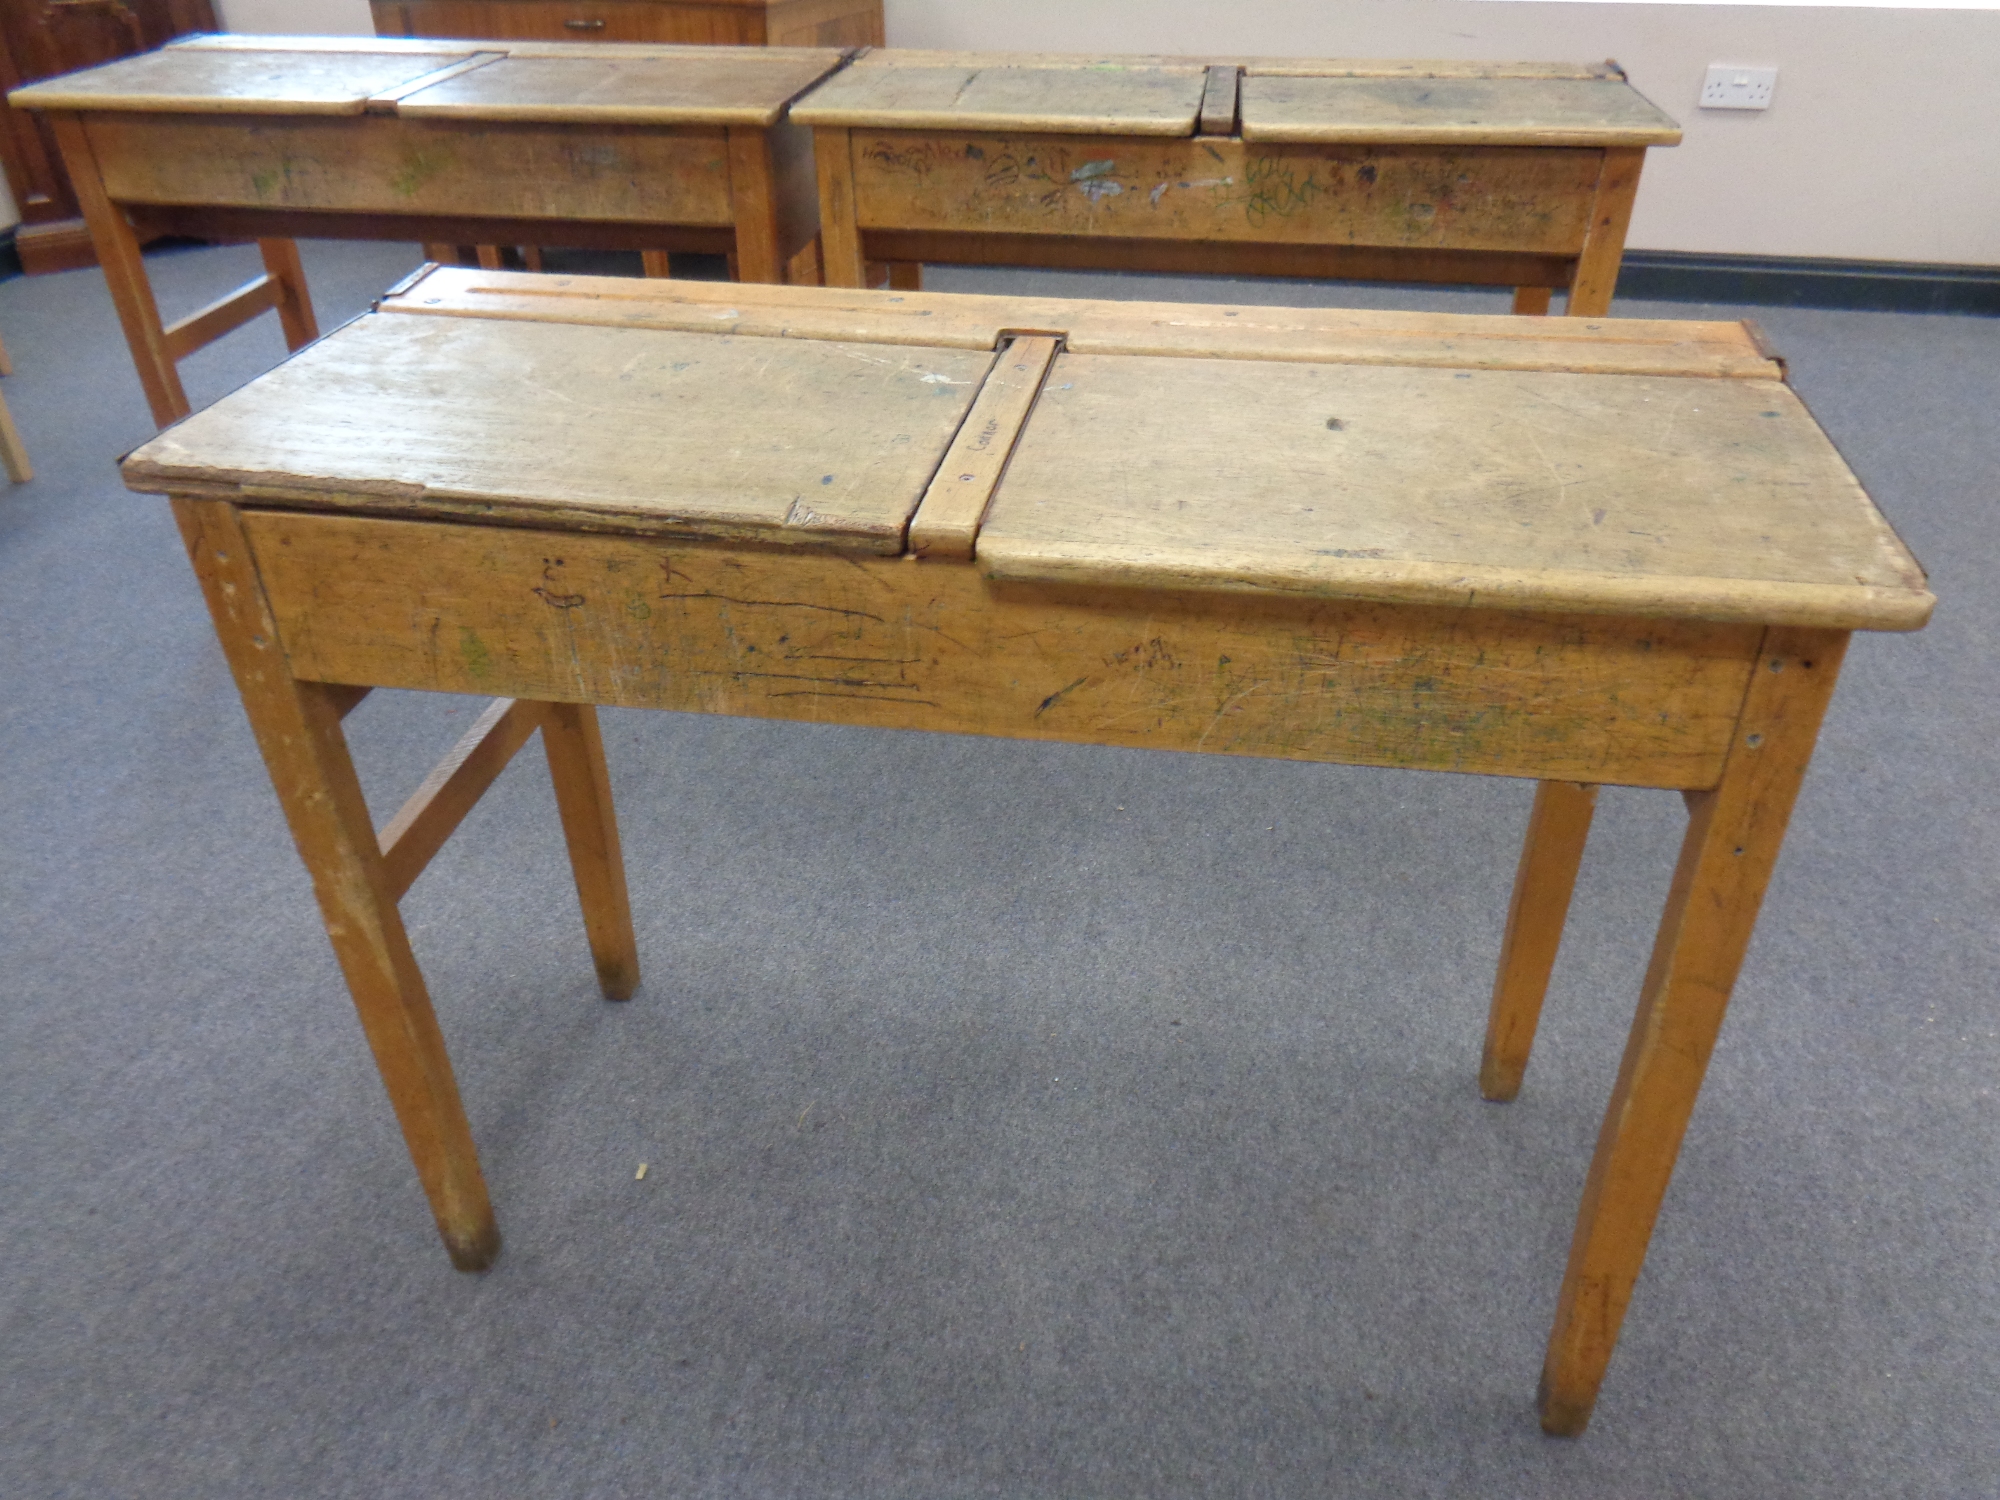 A 20th century double school desk